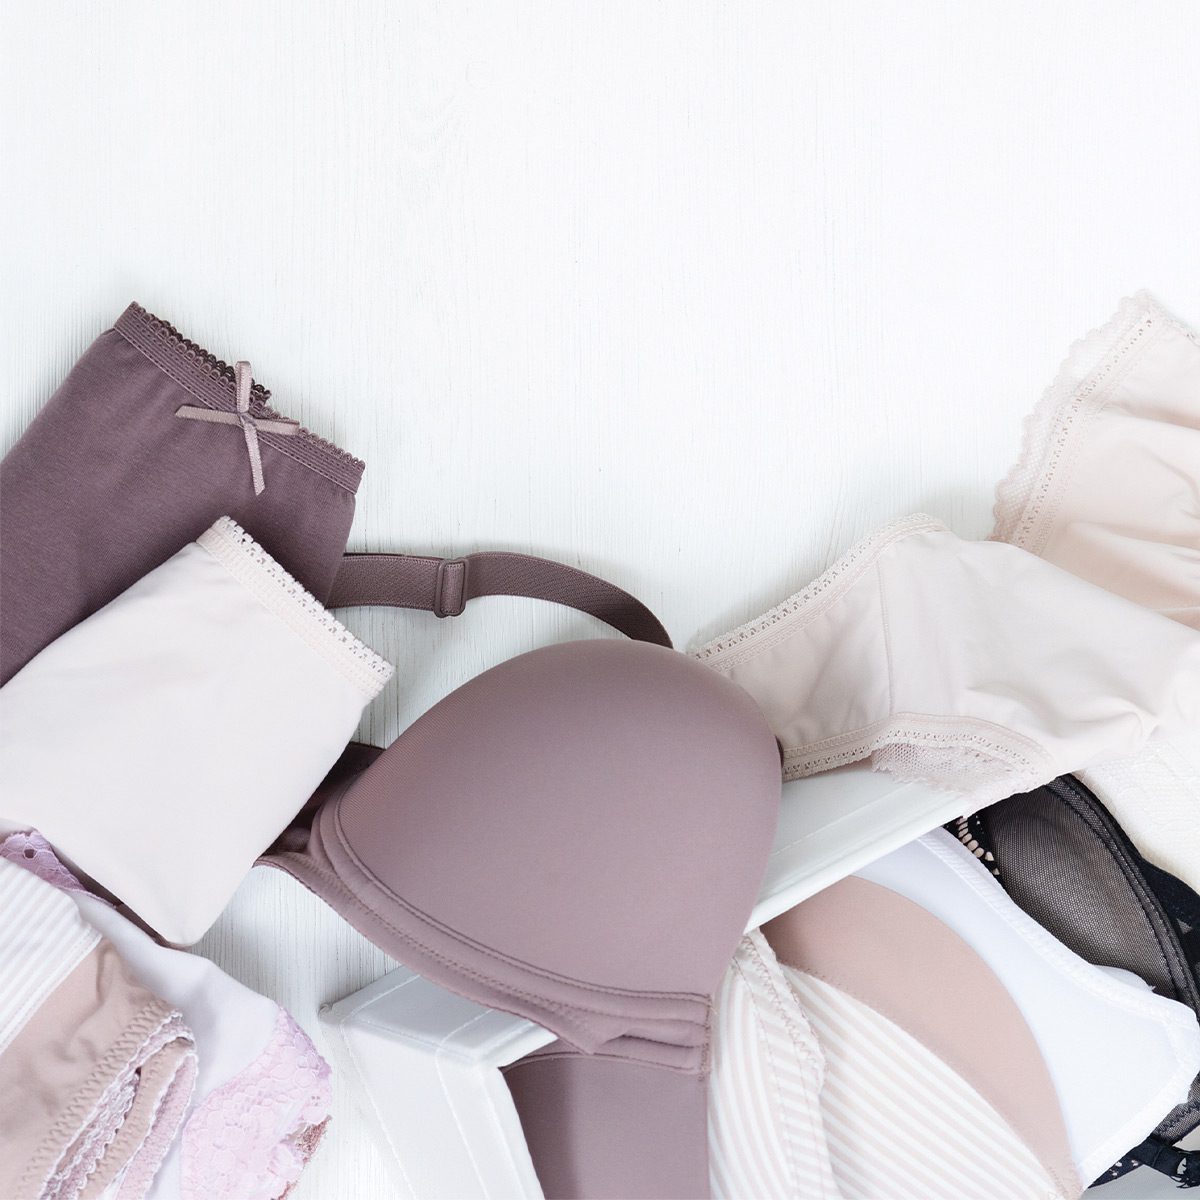 bras, underwear, and other shapewear undergarments